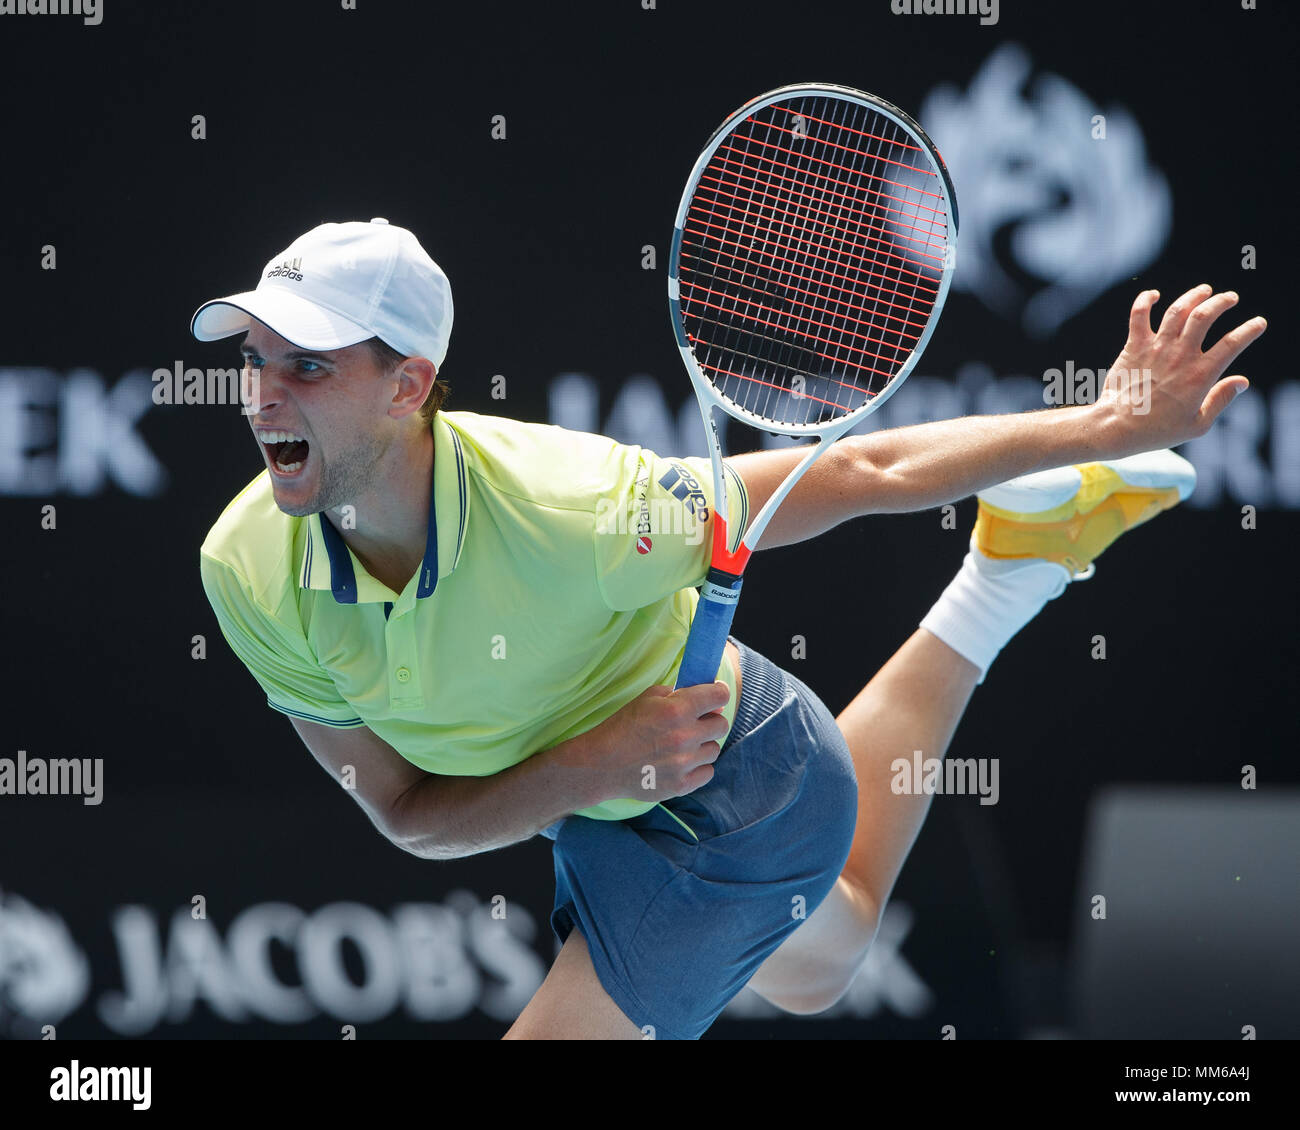 Austrian tennis player Dominic Thiem hitting a service shot in Australian Open Tennis Tournament, Melbourne Park, Melbourne, Victoria, Australia Stock Photo - Alamy